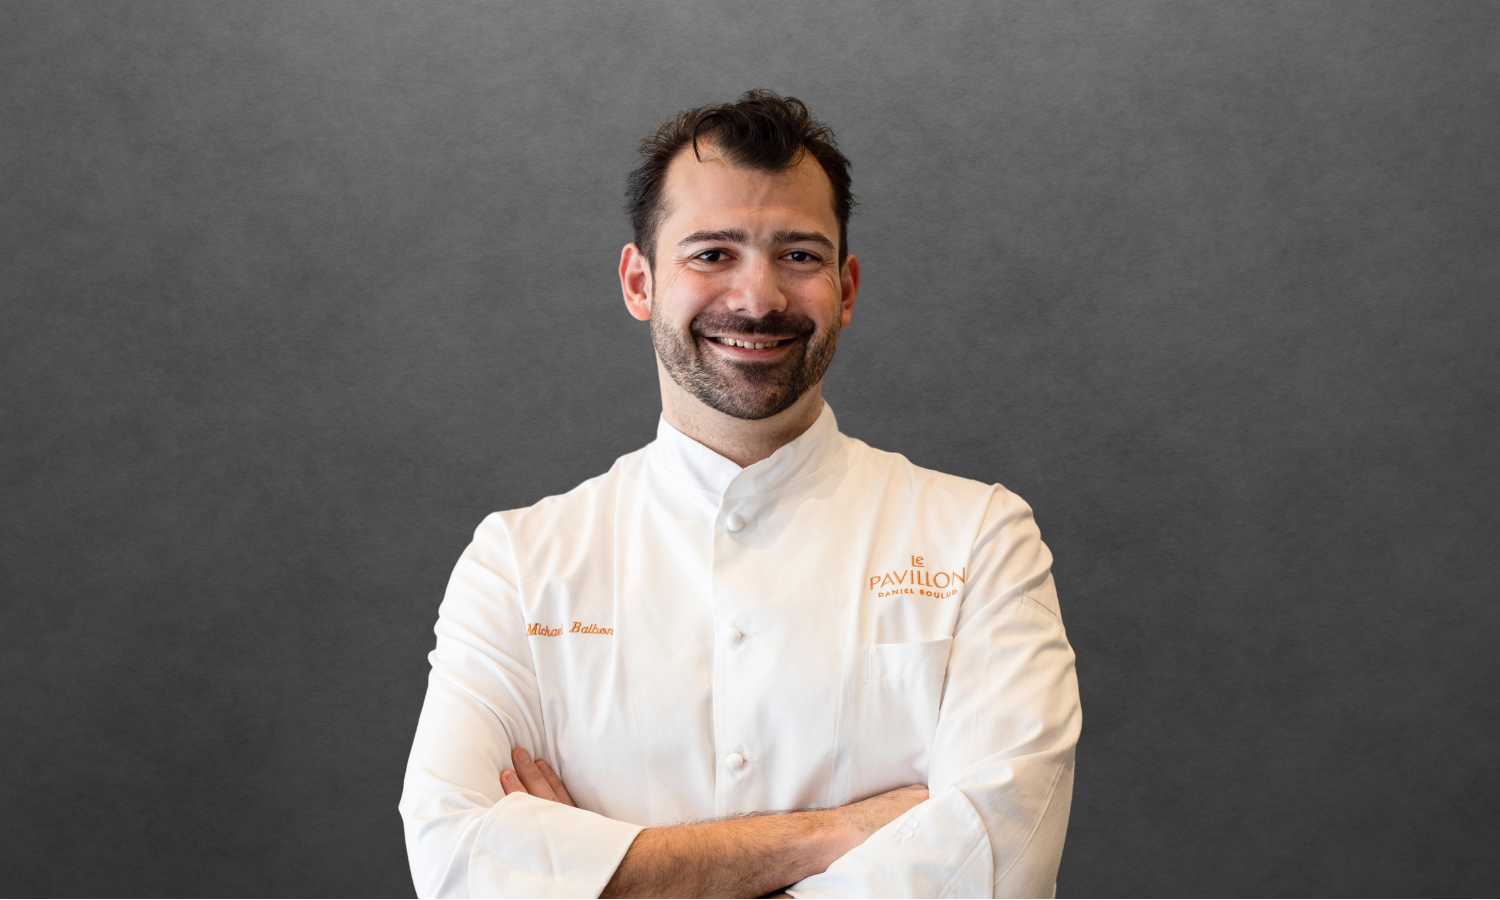 Chef Michael Balboni